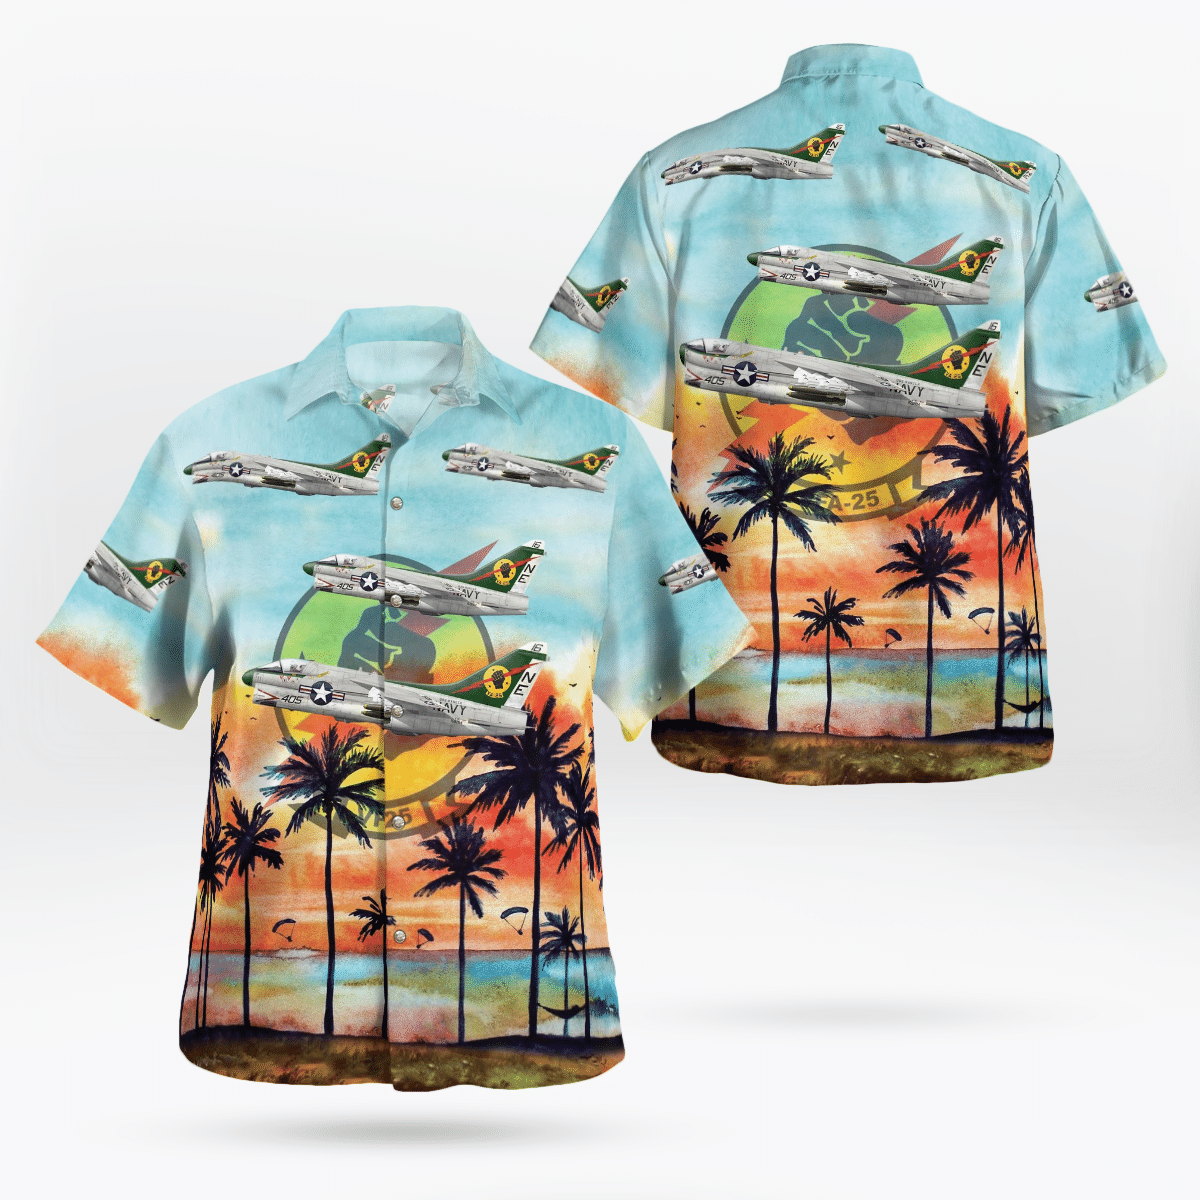 Why don't you order Hot Hawaiian Shirt today? 343